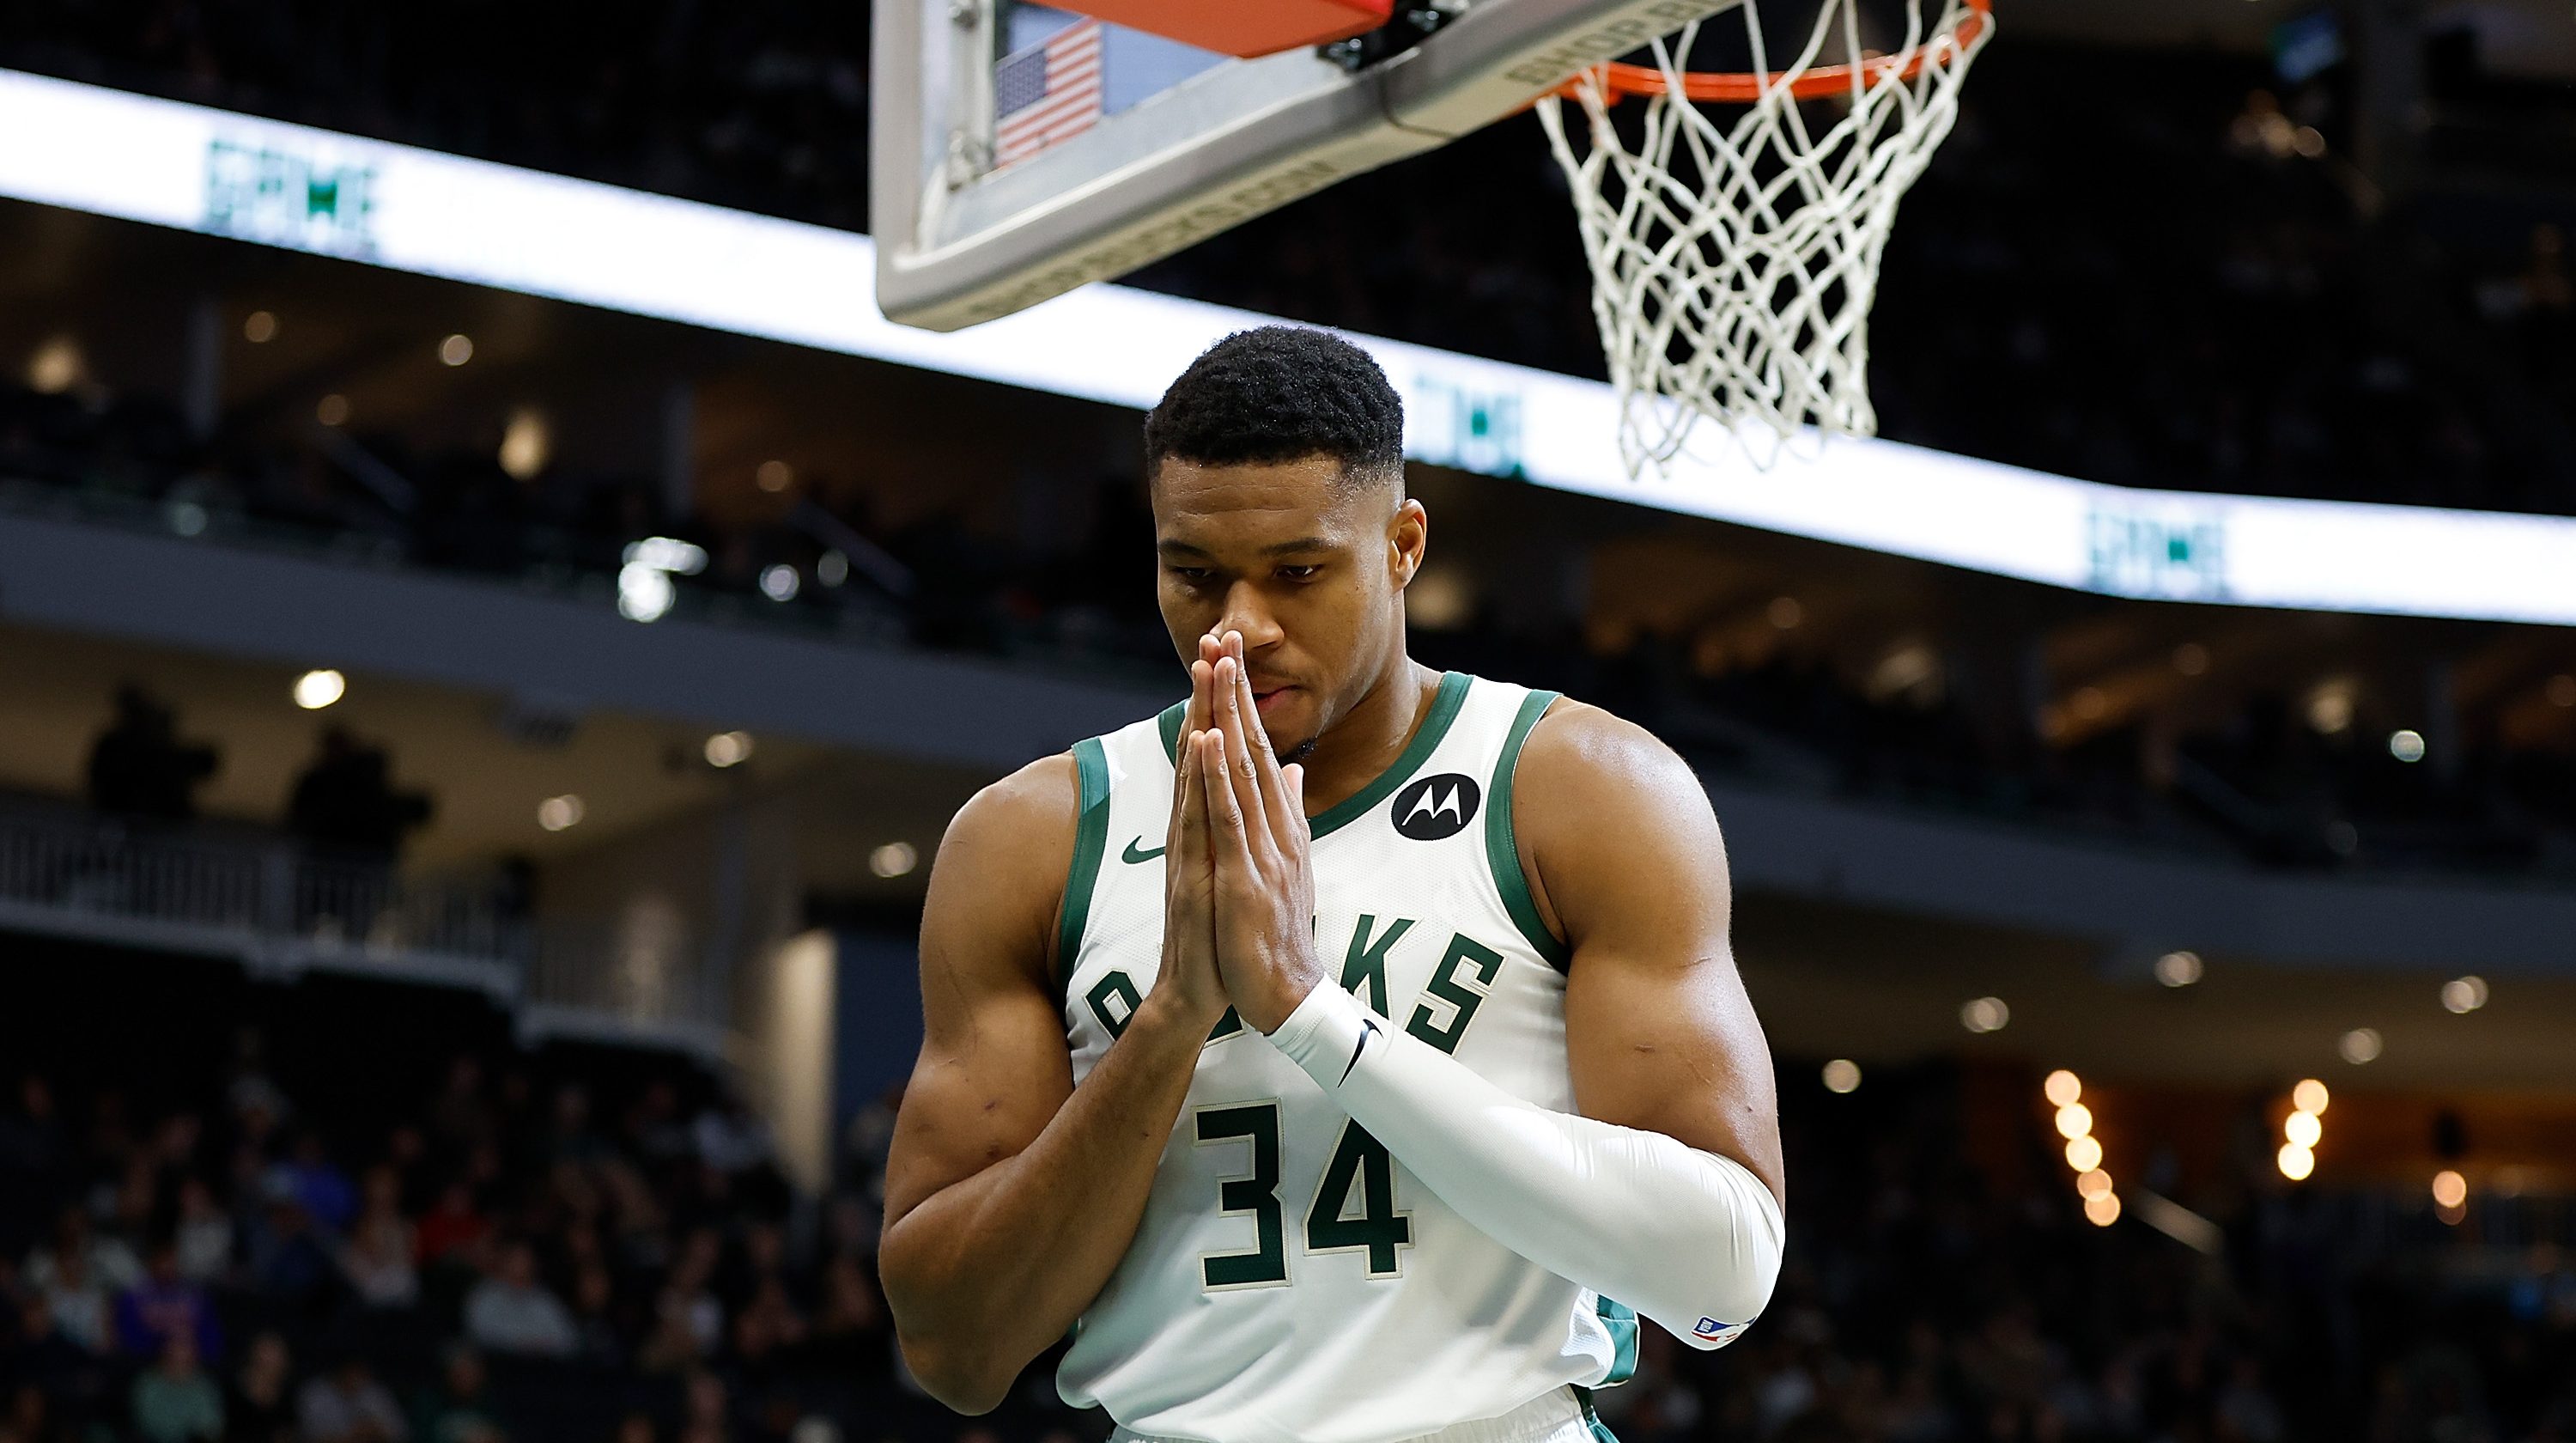 NBC Sports Boston's lack of depth apparent on recent Celtics broadcast